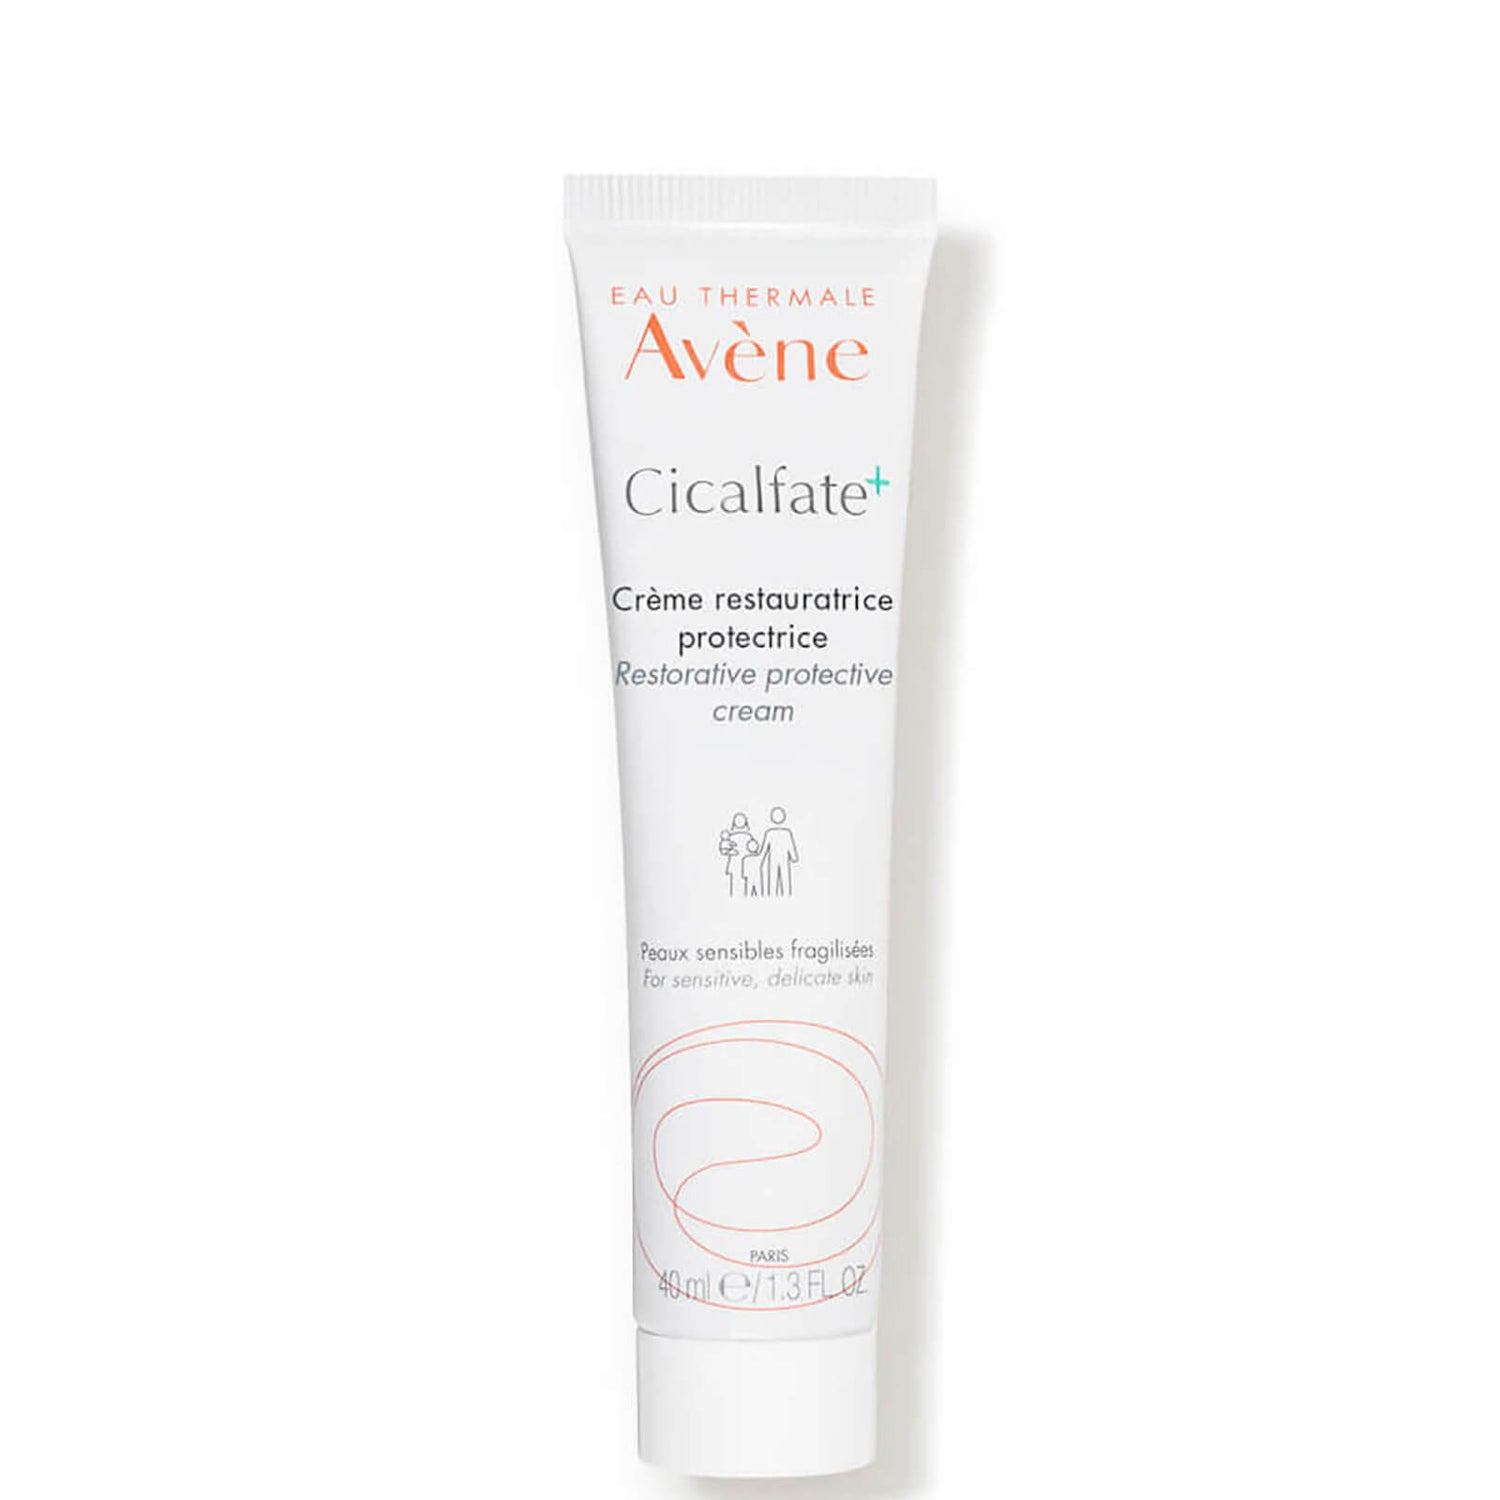 Cicalfate+ Restorative Protective Cream helps restore Skin Barrier